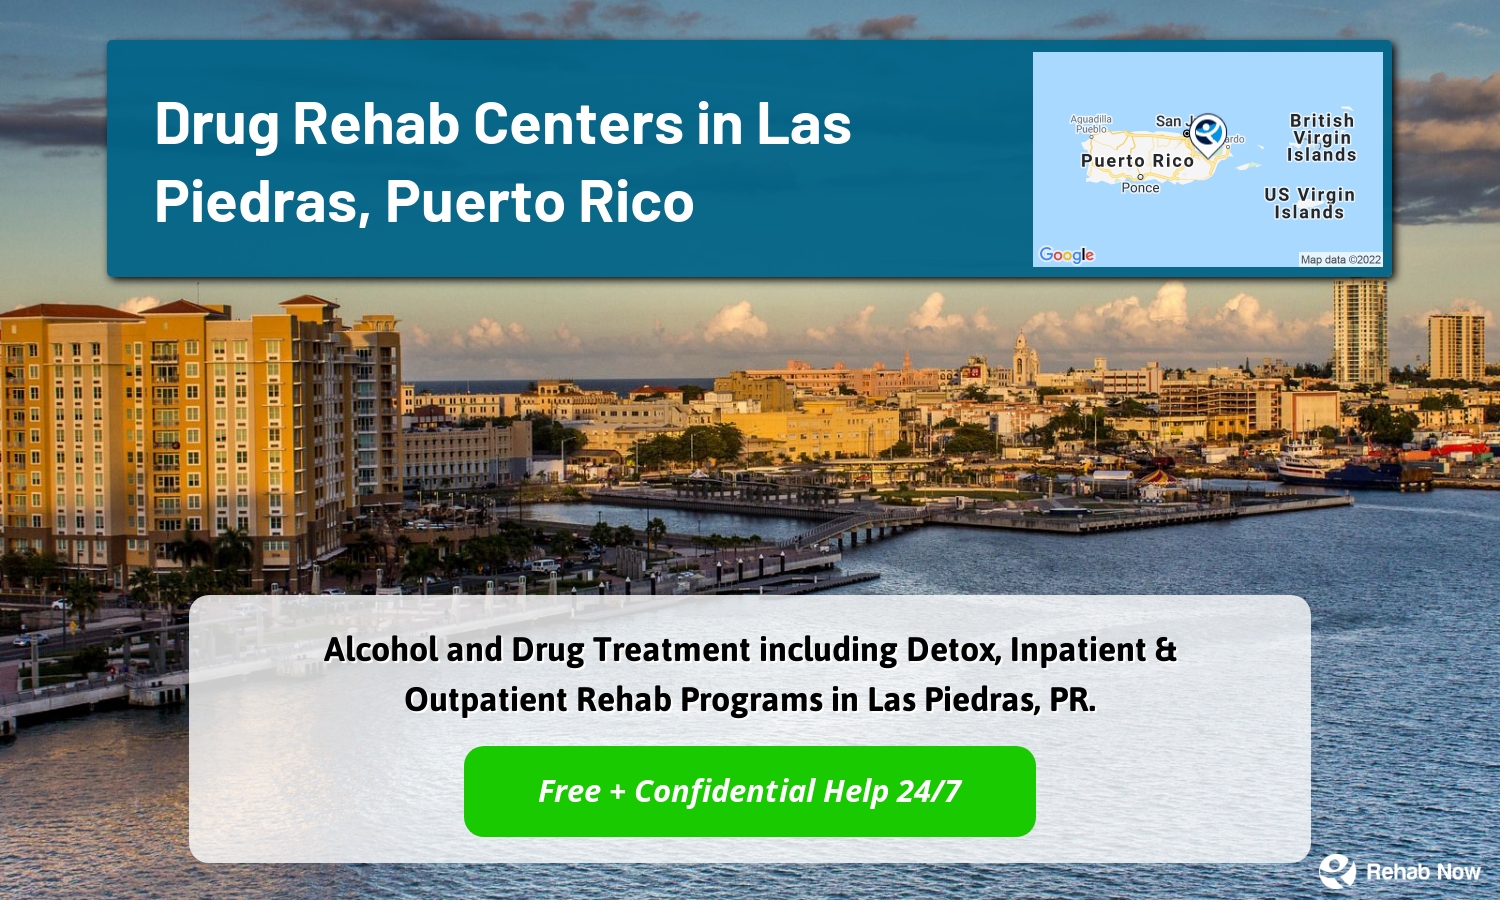 Alcohol and Drug Treatment including Detox, Inpatient & Outpatient Rehab Programs in Las Piedras, PR.